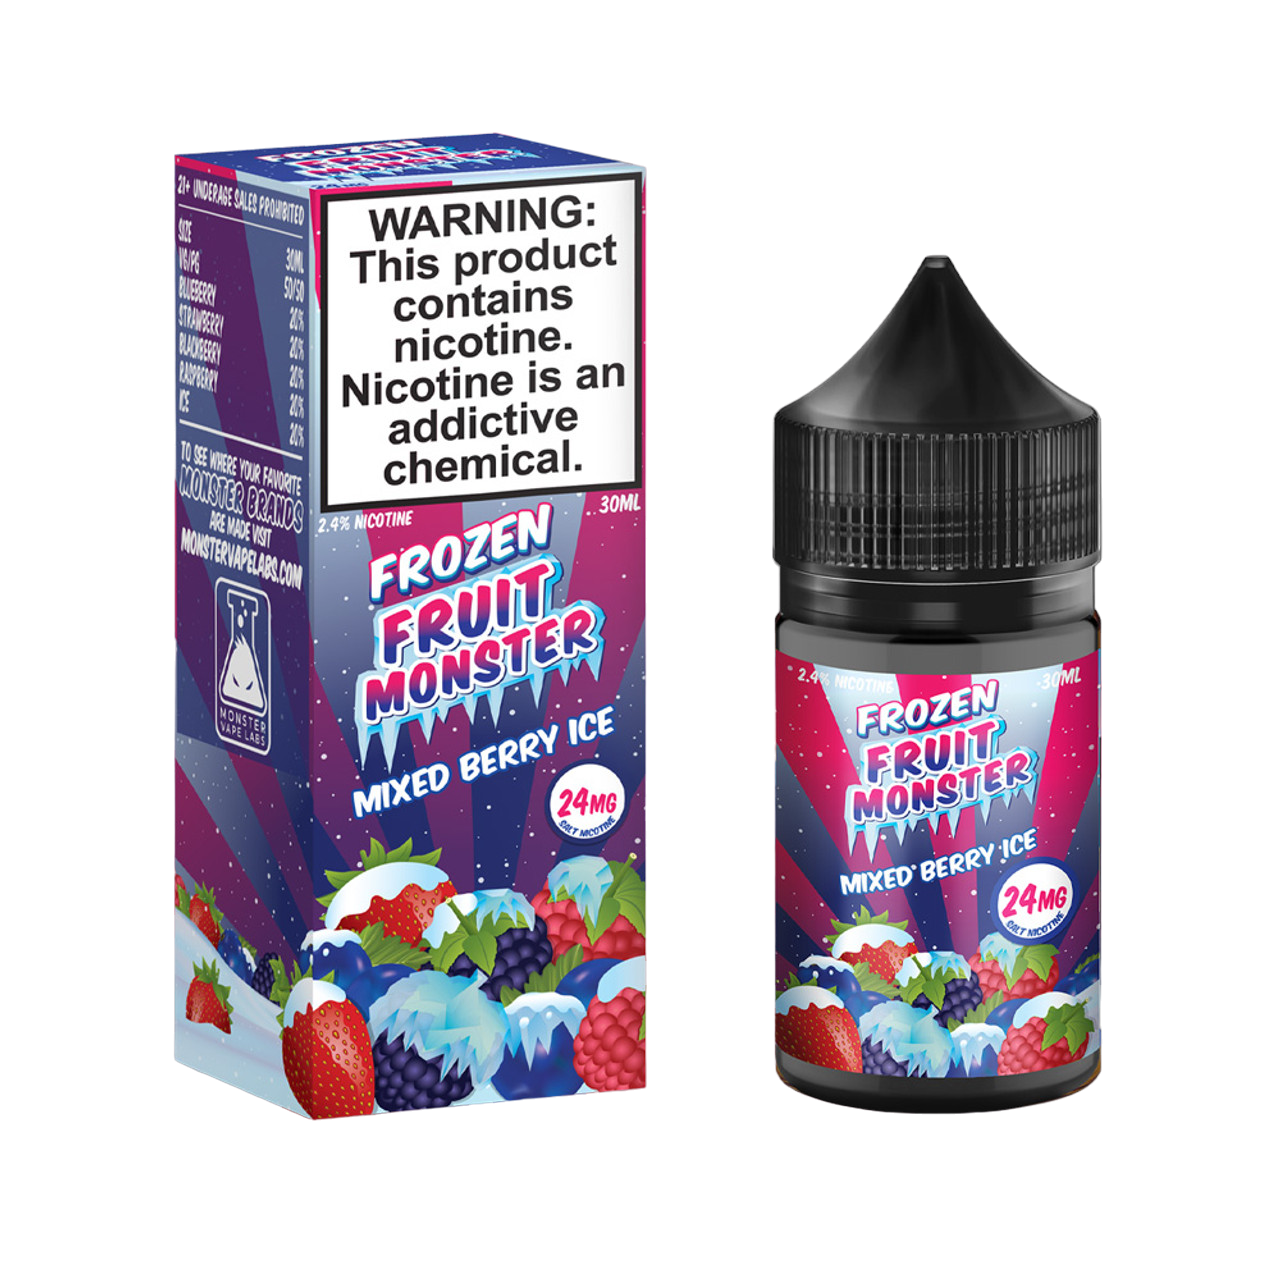 Frozen Fruit Monster Synthetic Nicotine Salt E-Liquid 30ML - Mixed Berry Ice